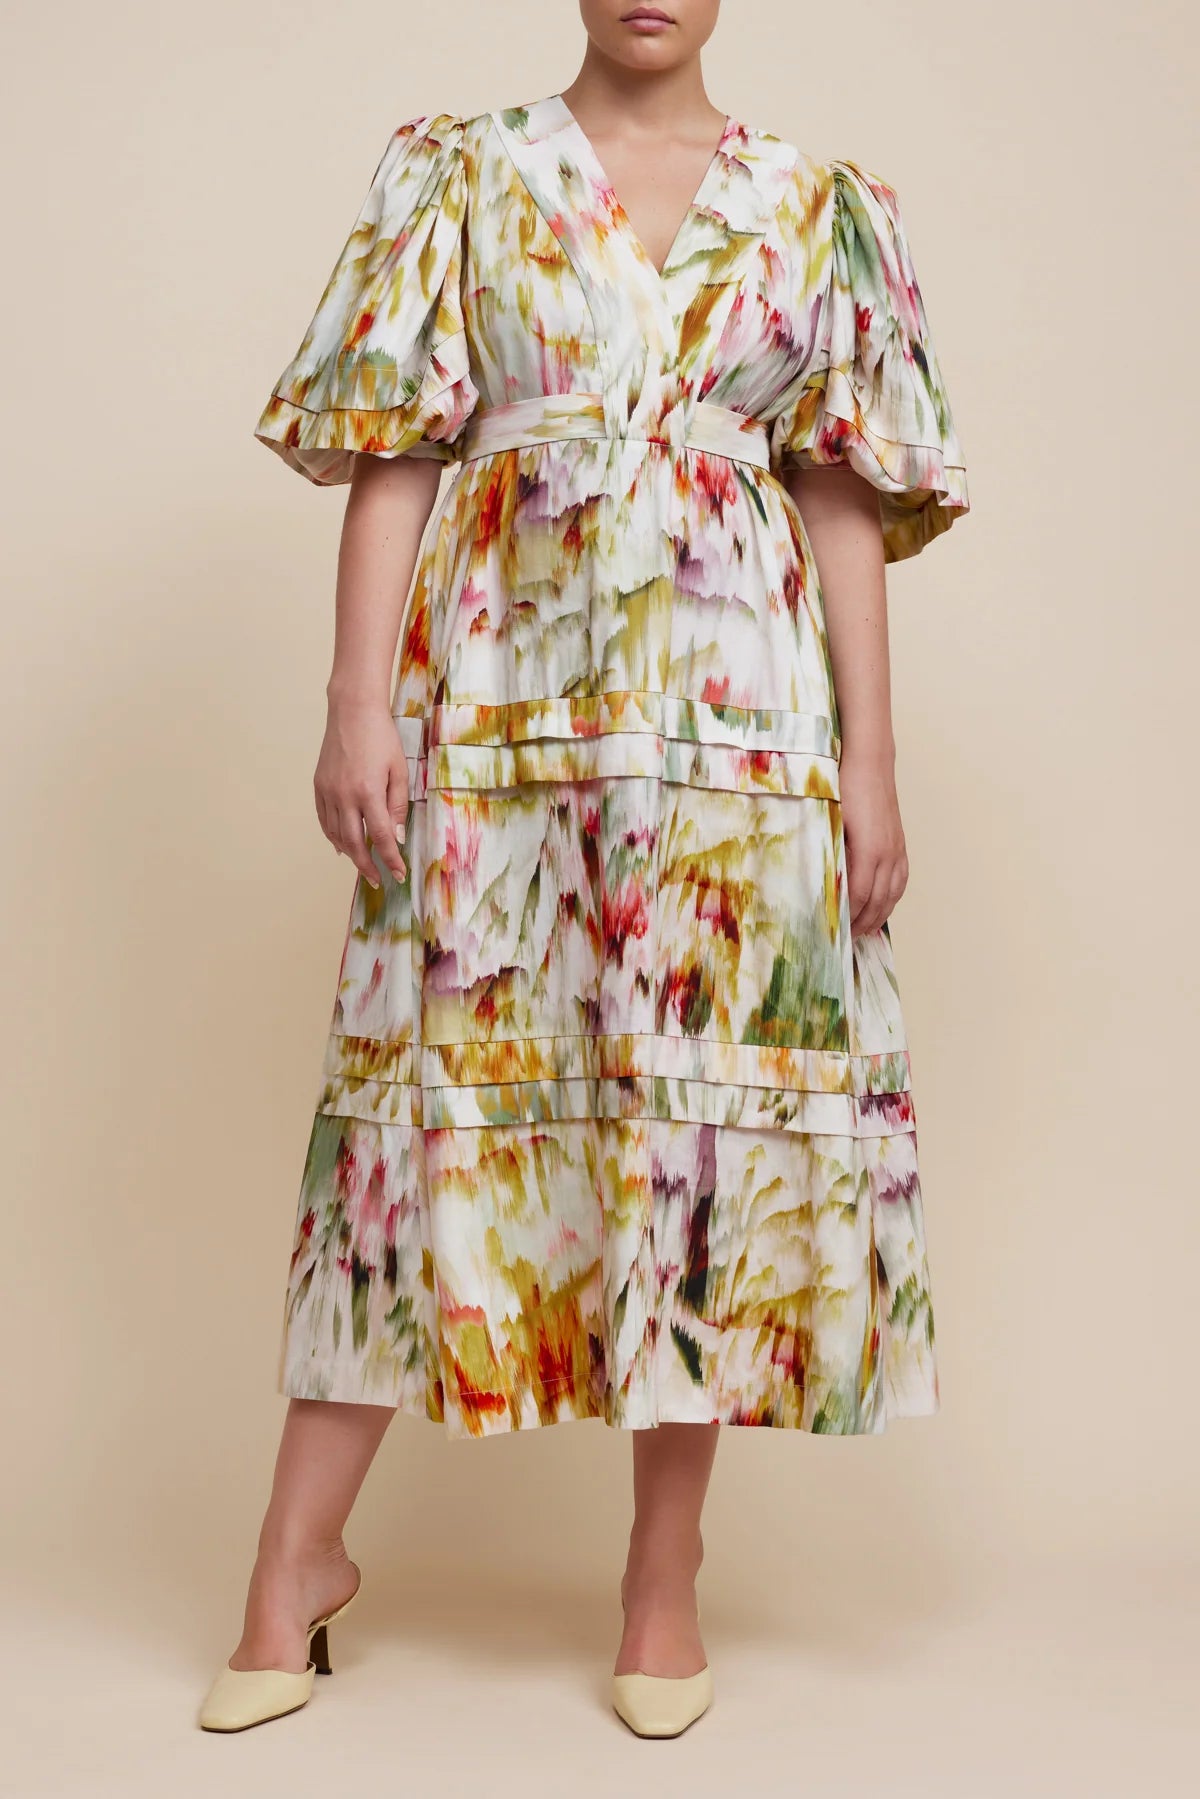 Marston Dress - Monet Garden Print